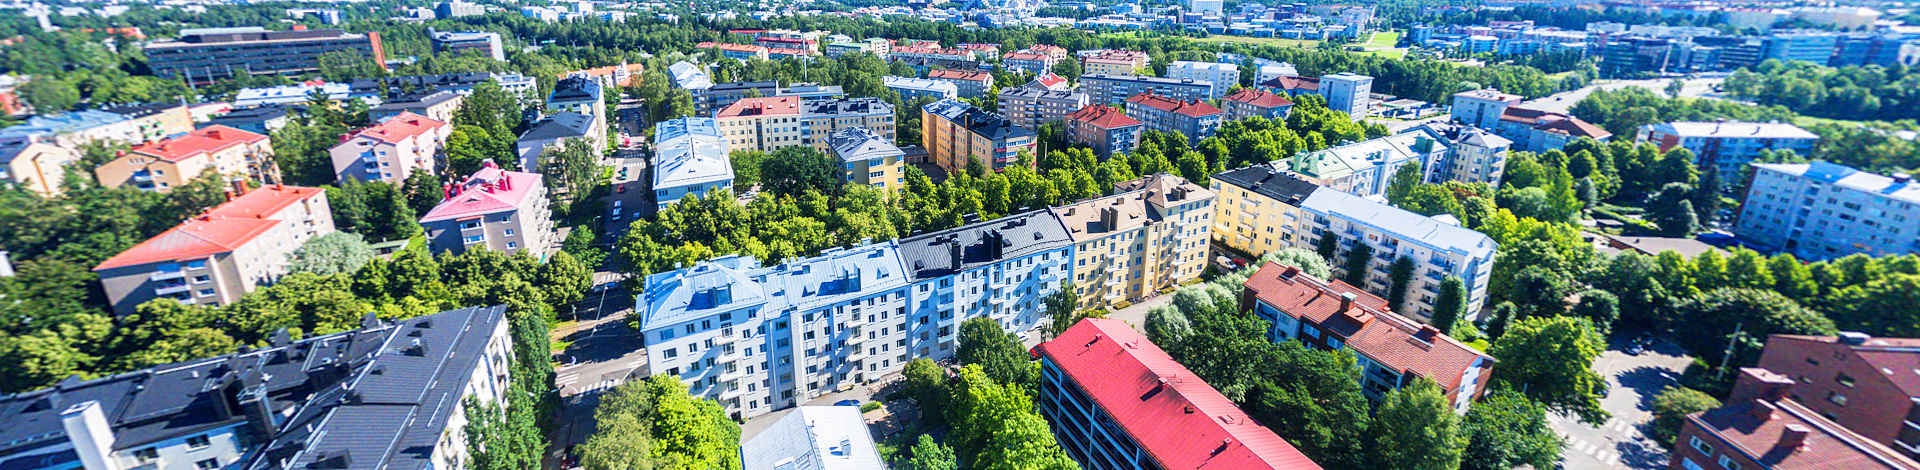 View of Munkkiniemi, Helsinki